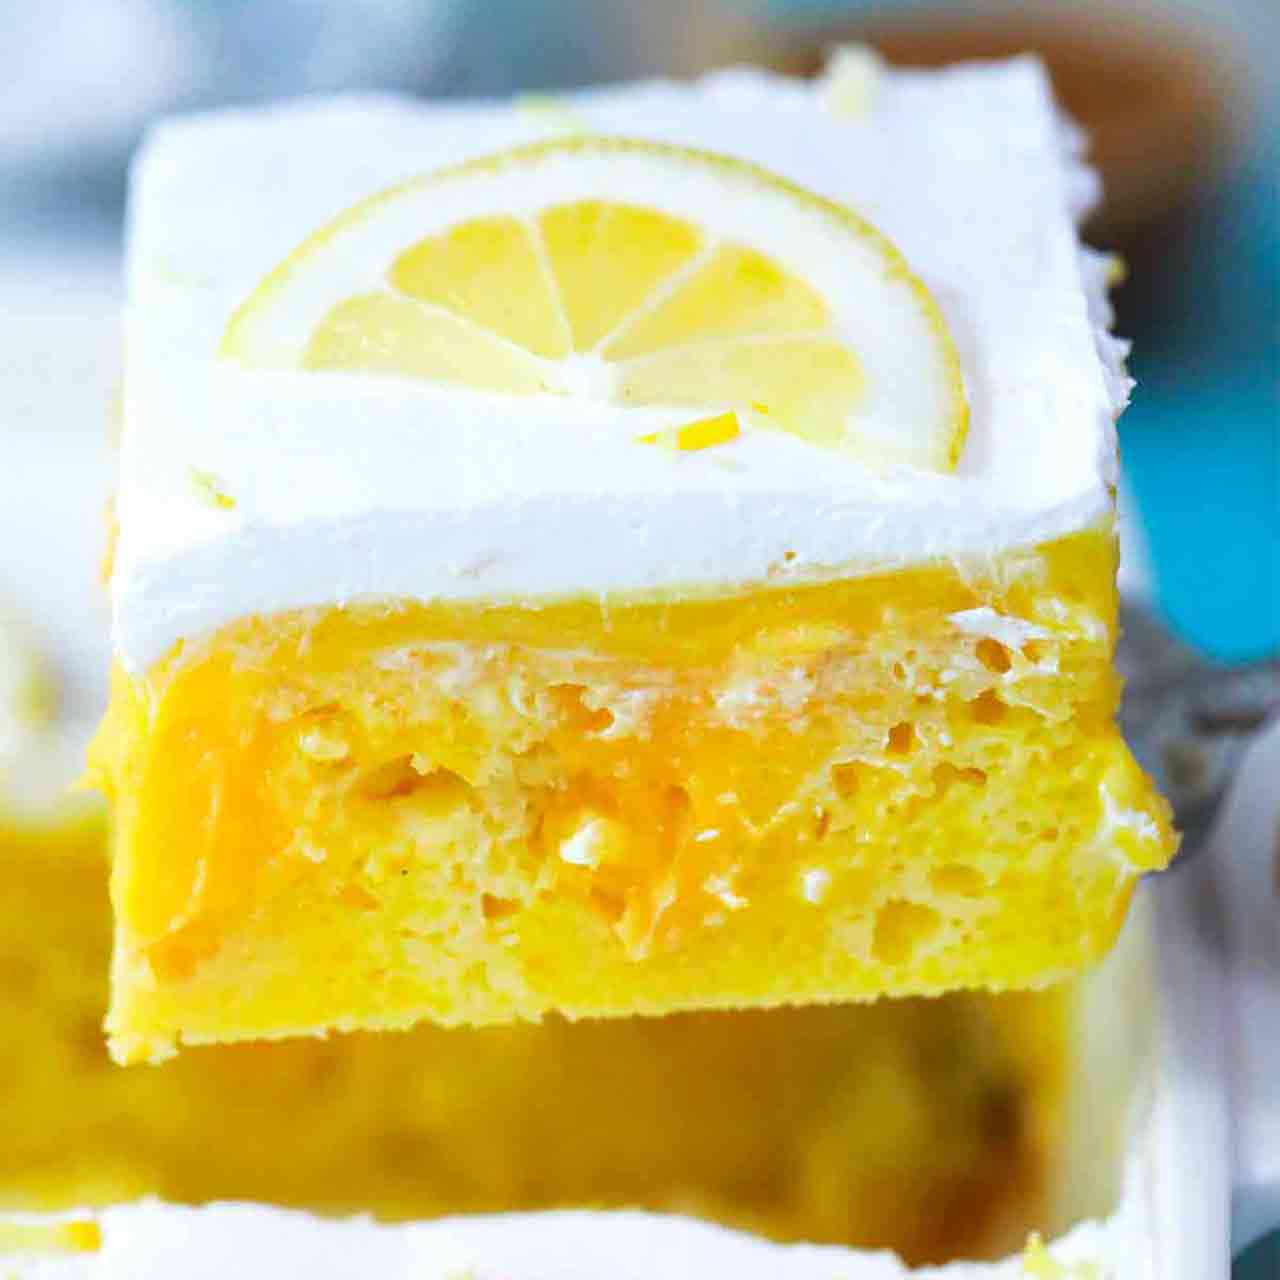 A close-up view of lemon poke cake.